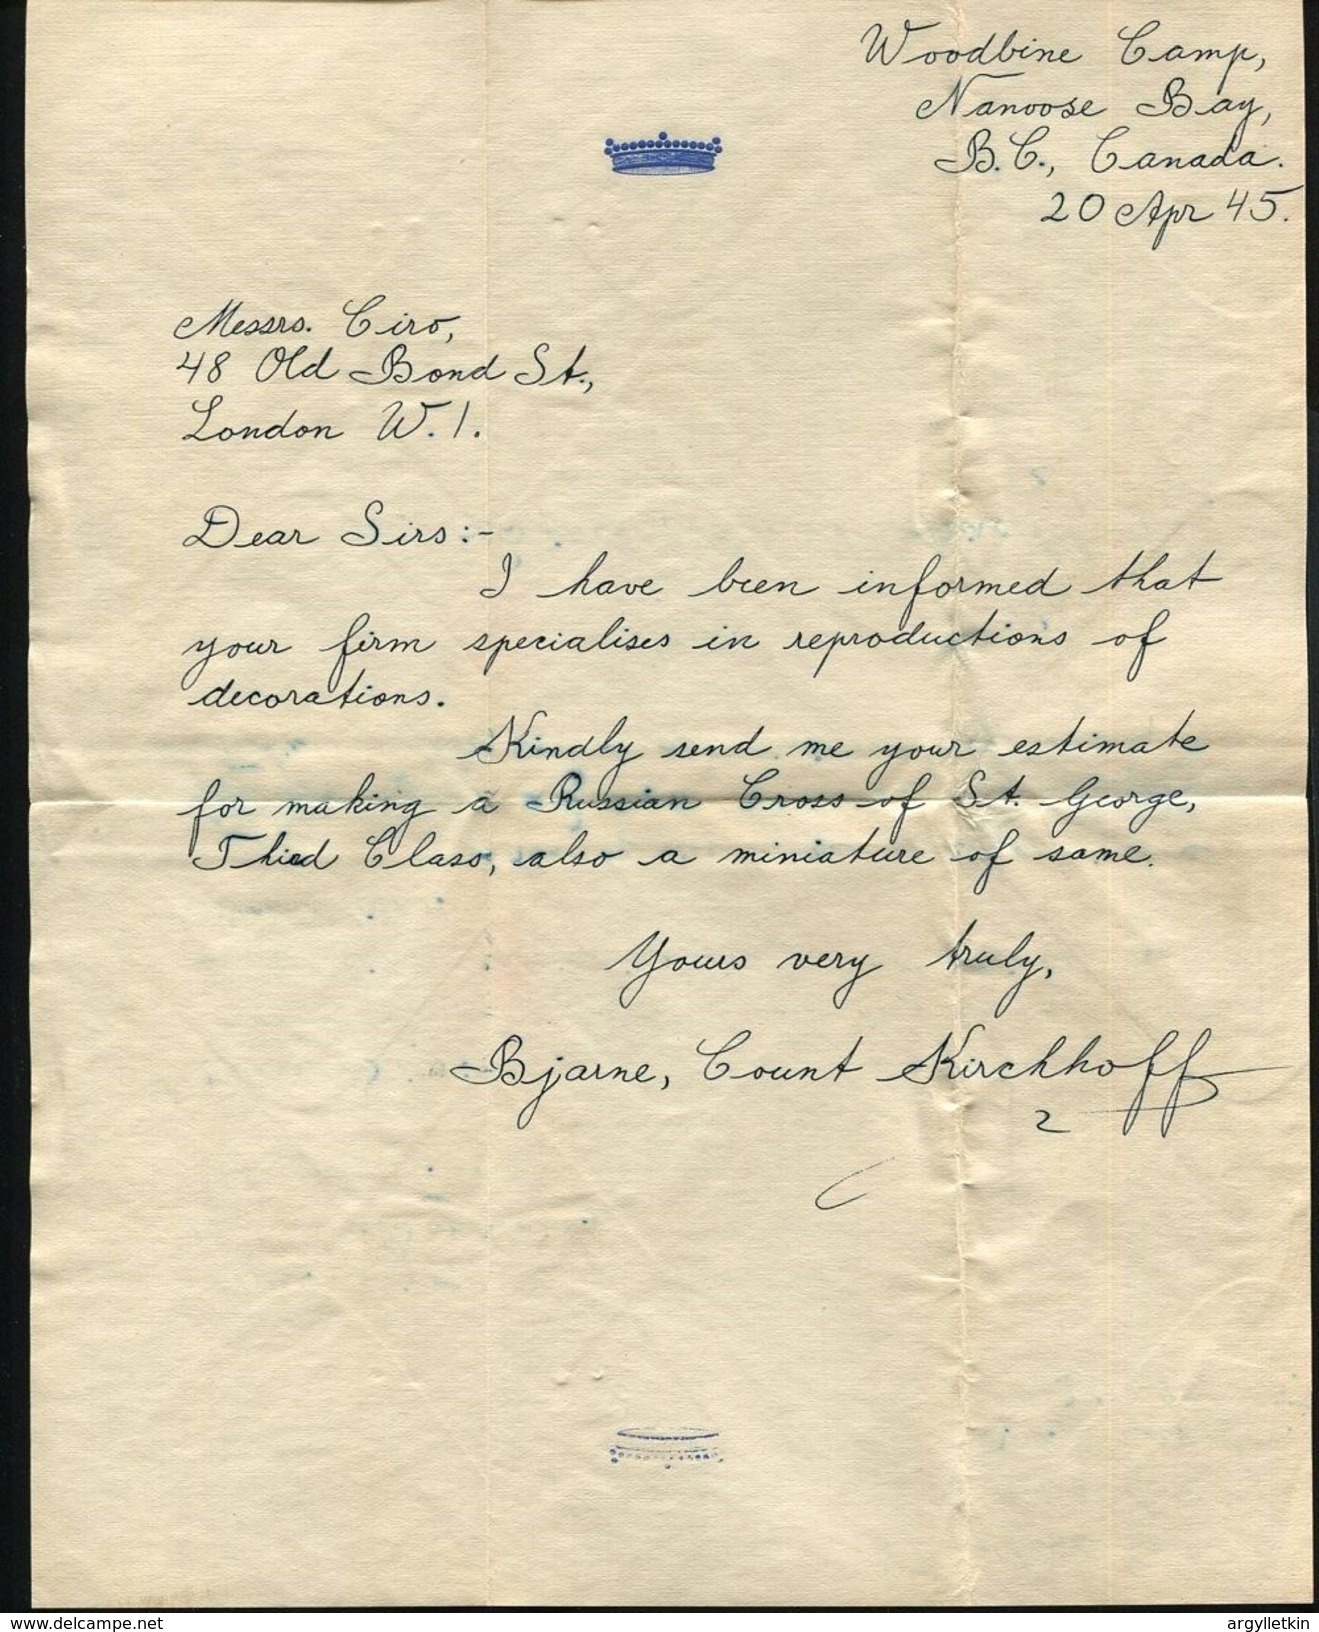 CANADA NANOOSE BAY GB LONDON WRECK 1945 SCYTHIA RUSSIA COUNT KIRCHHOFF - Gedenkausgaben